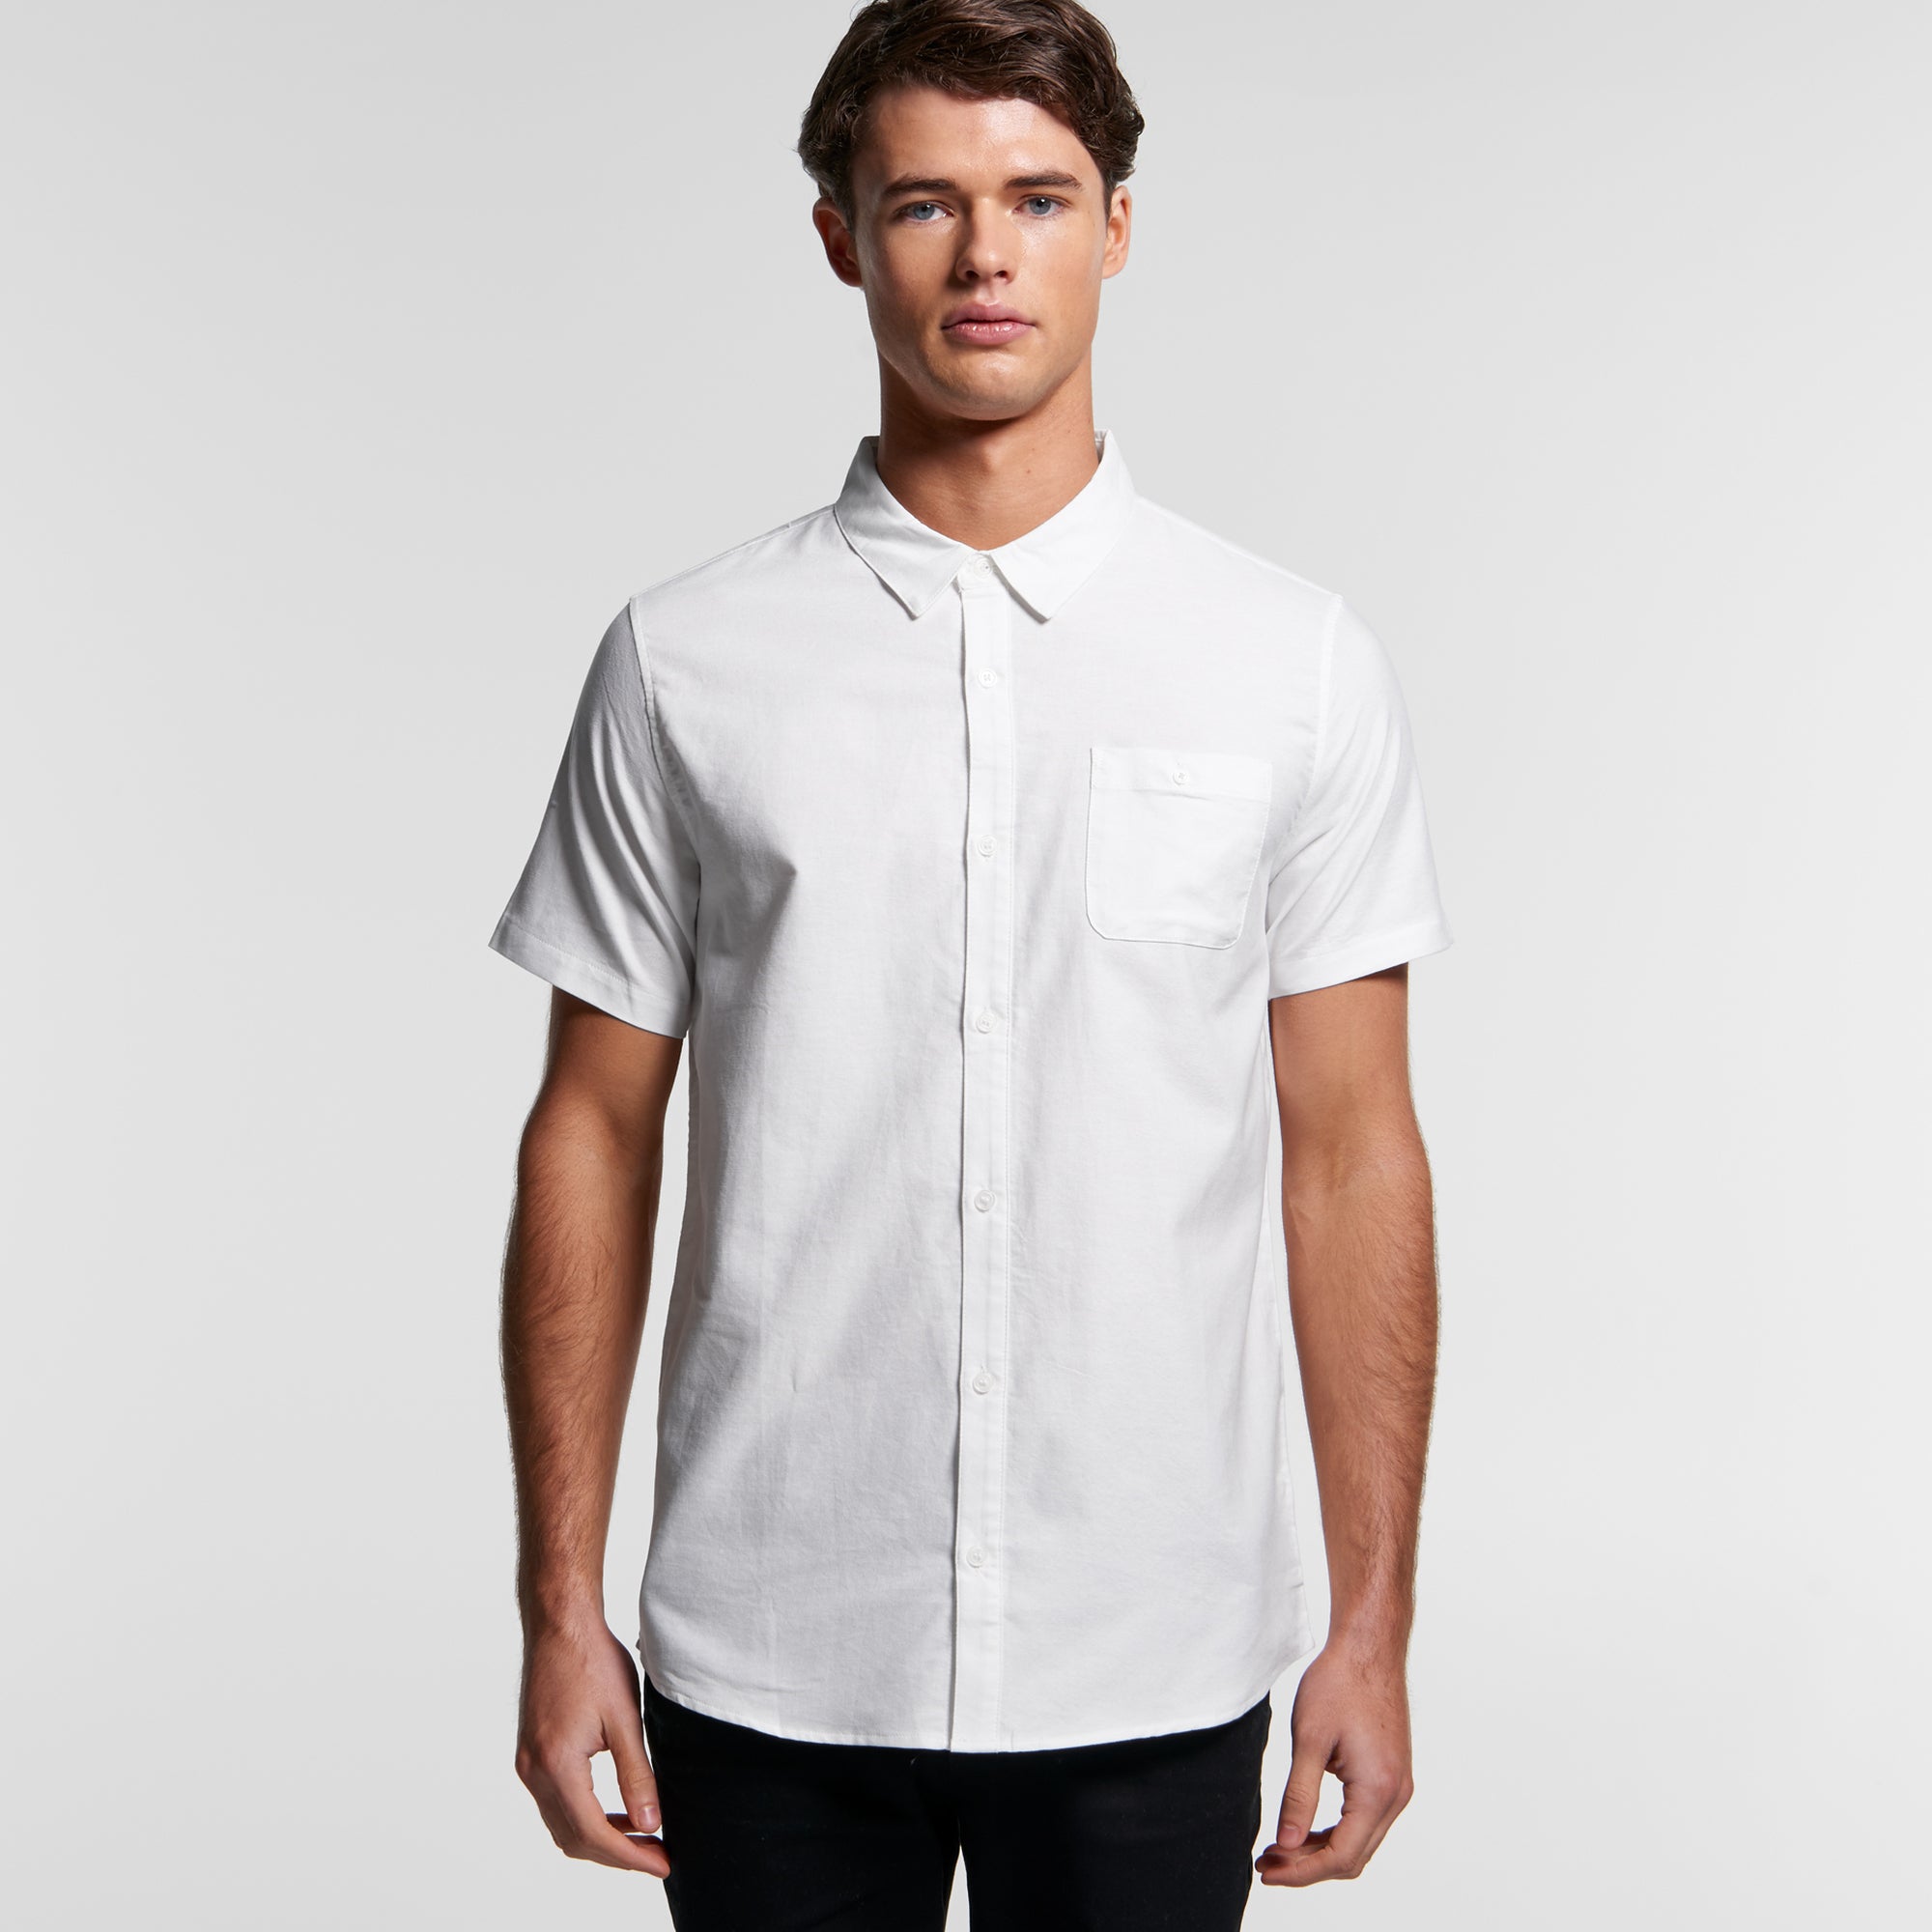 AS Colour | Men's Oxford S/S Shirt - Custom Clothing | T Shirt Printing | Embroidery | Screen Printing | Print Room NZ